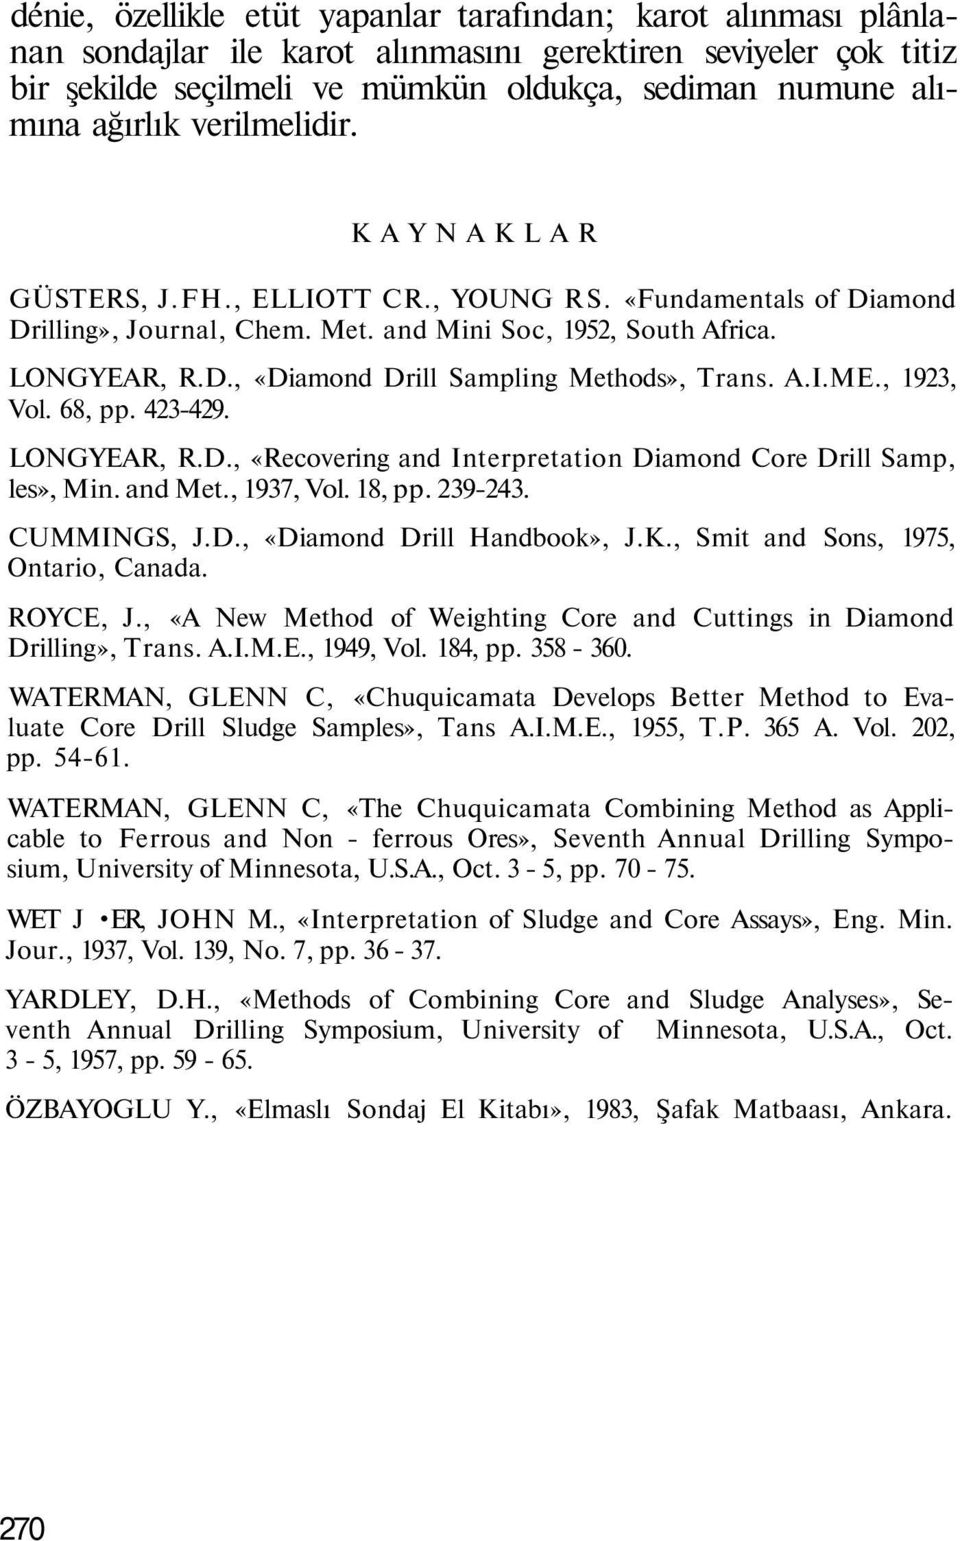 A.I.ME., 1923, Vol. 68, pp. 423-429. LONGYEAR, R.D., «Recovering and Interpretation Diamond Core Drill Samp, les», Min. and Met., 1937, Vol. 18, pp. 239-243. CUMMINGS, J.D., «Diamond Drill Handbook», J.